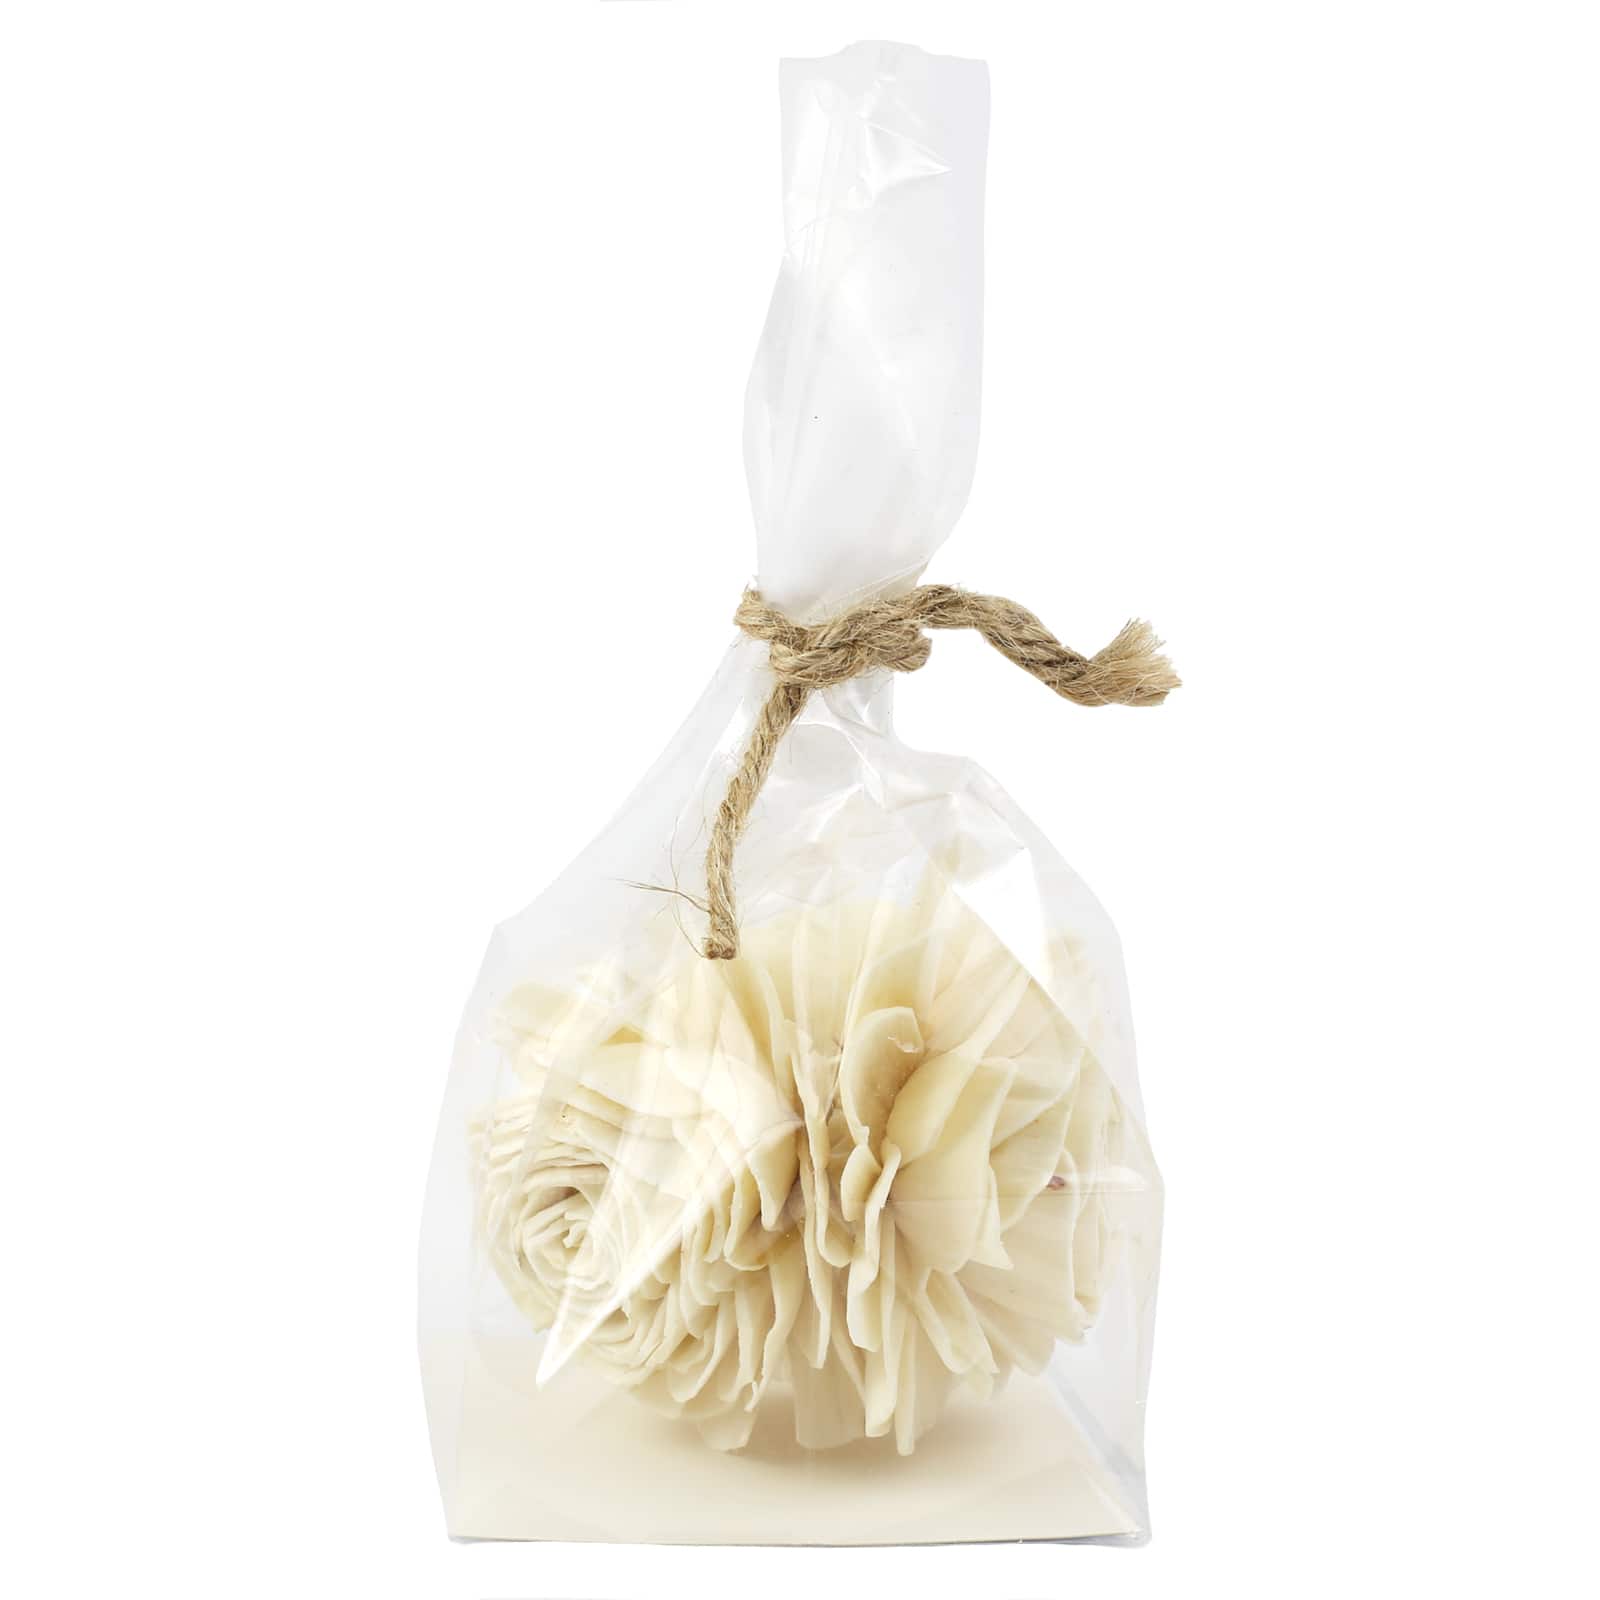 White Sola Flower Decorative Naturals by Ashland&#xAE;